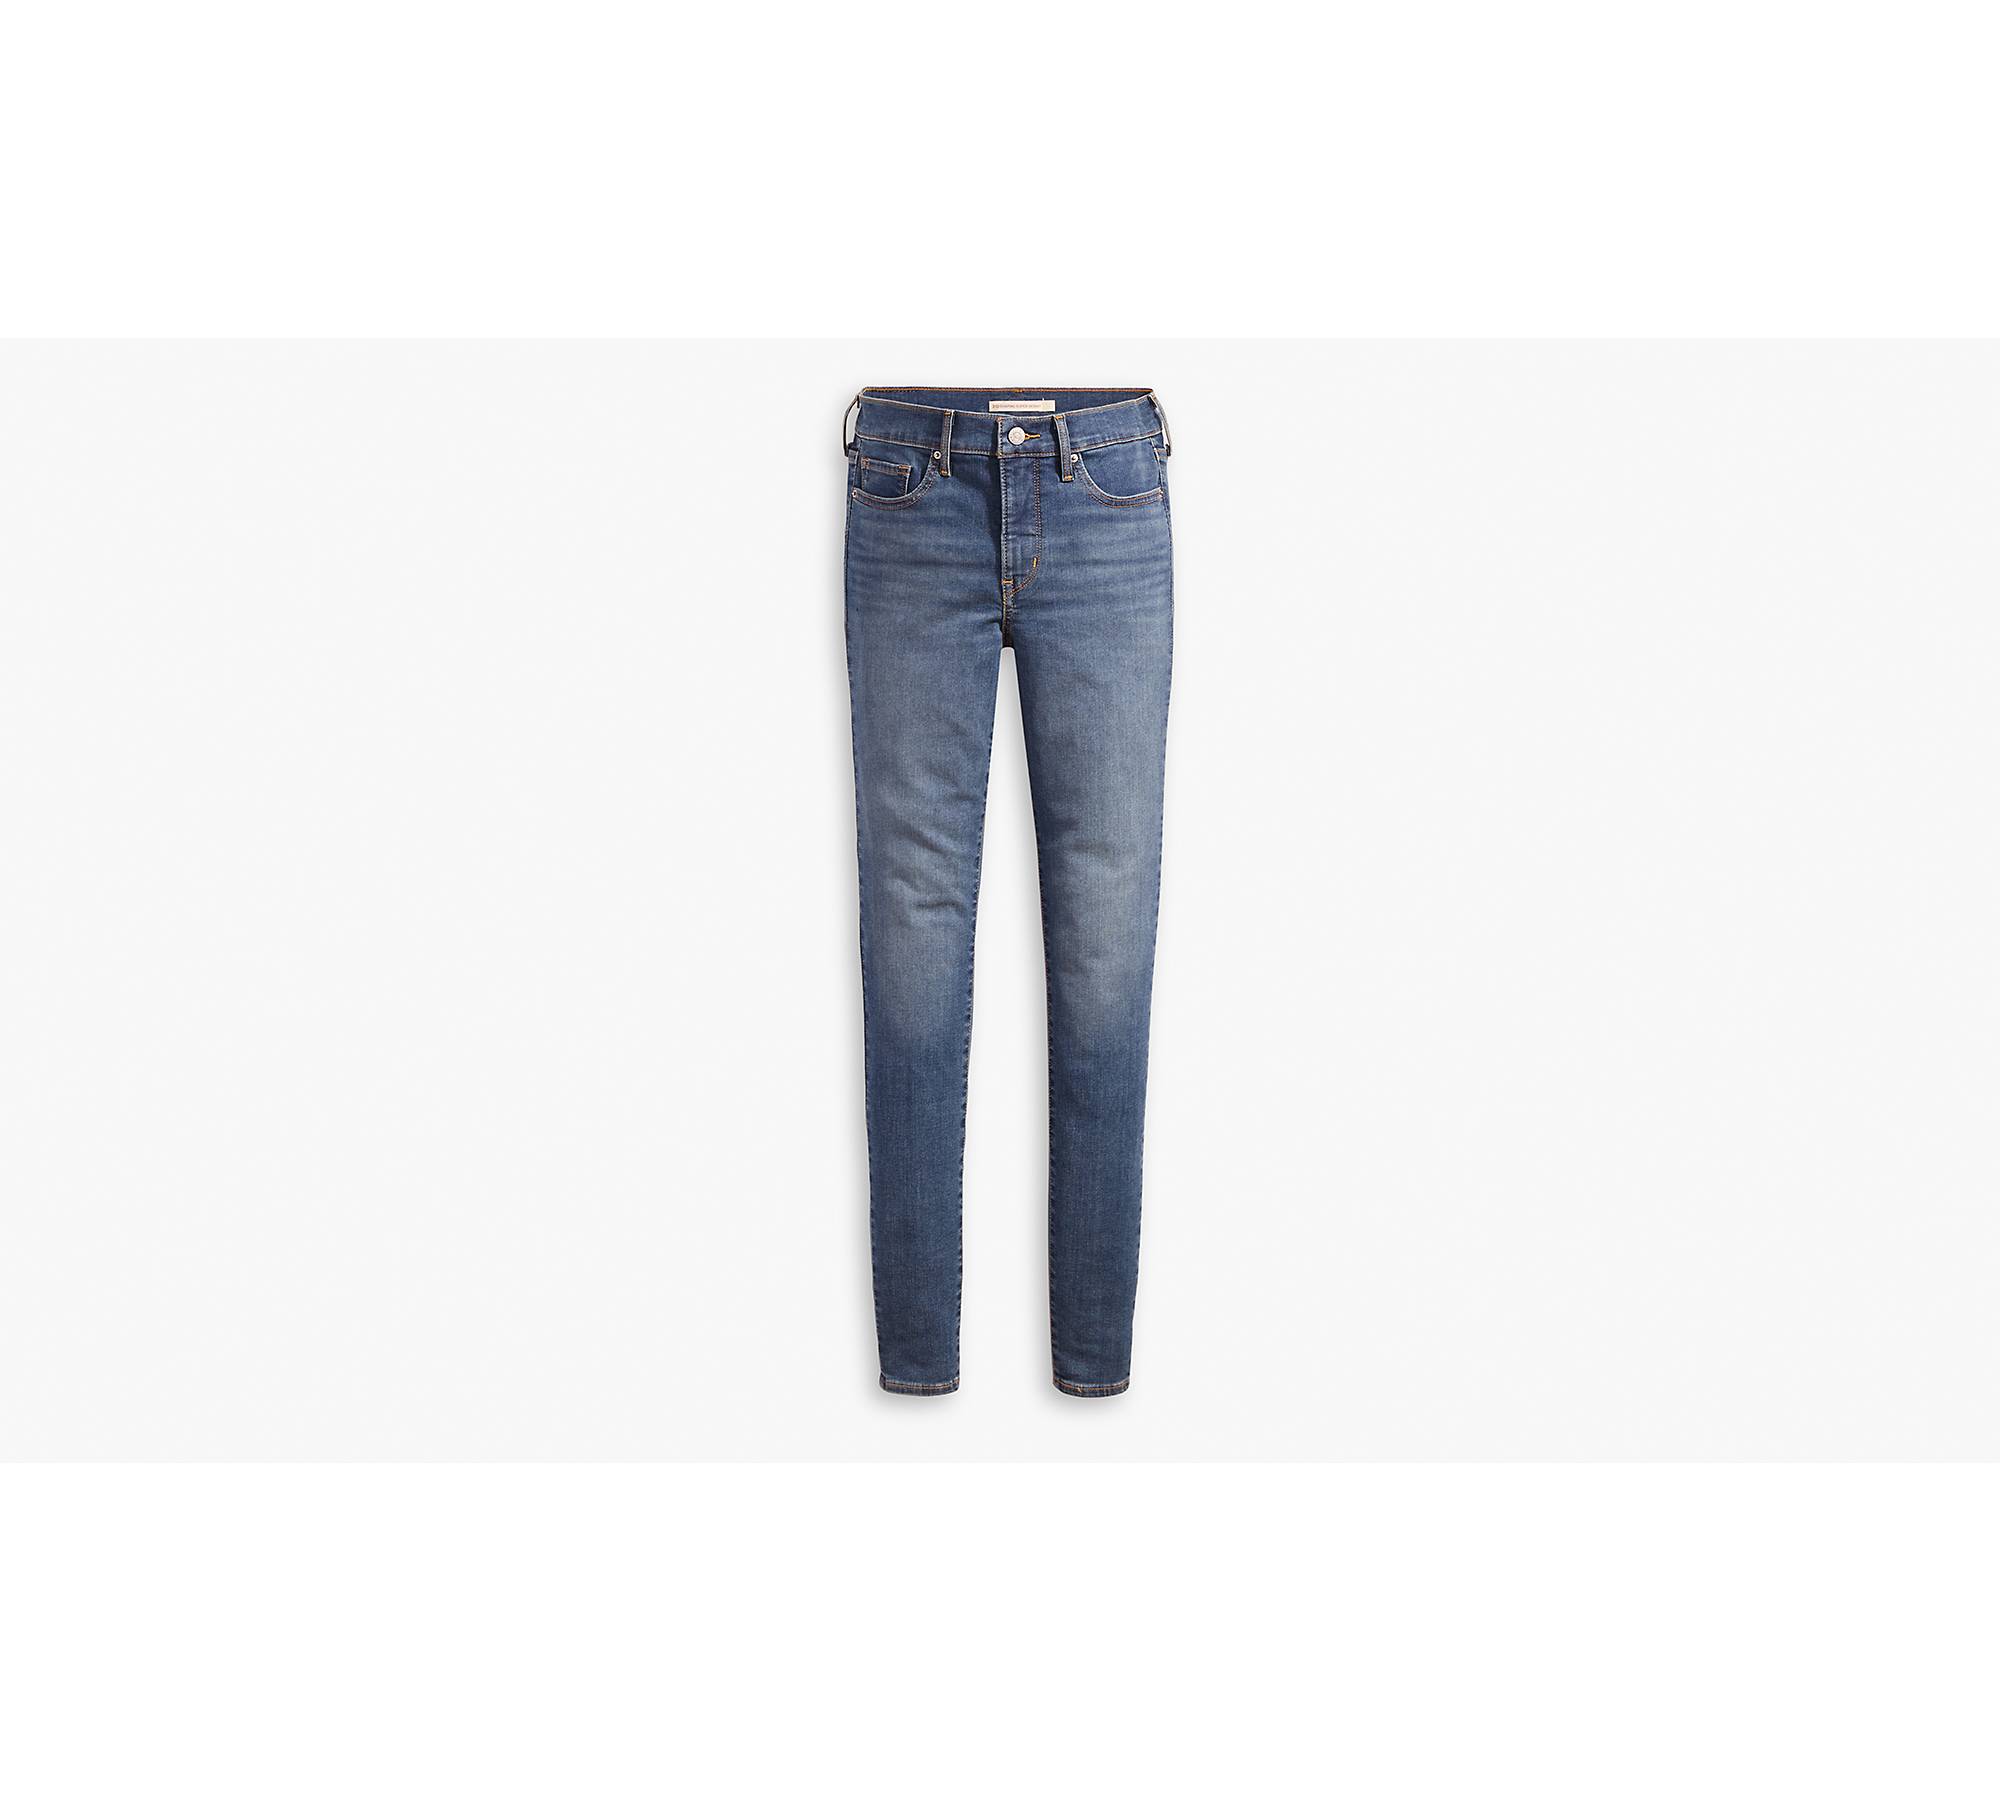 Buy Jeanex Women's Slim Fit Comfortable Denim Jeans Pants for